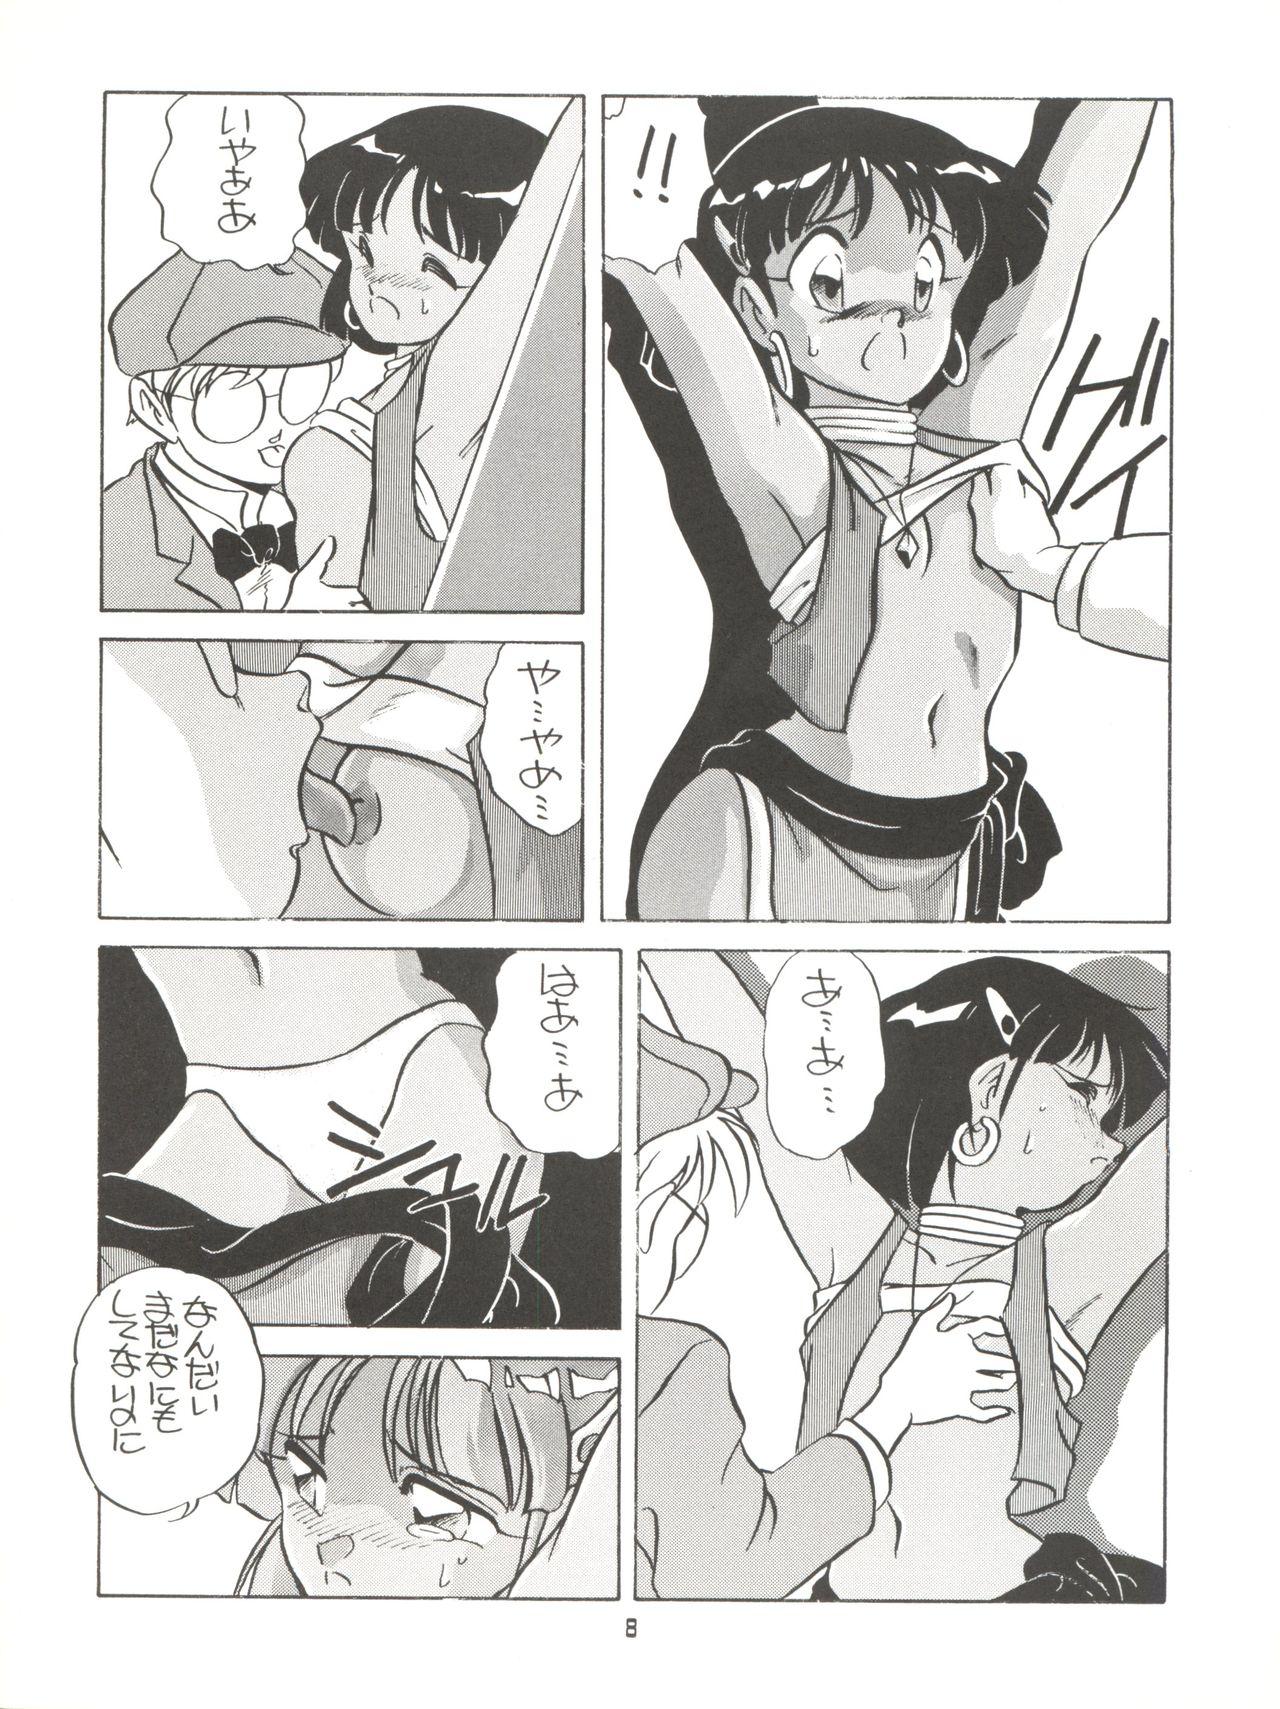 Spandex AMAMORI - Fushigi no umi no nadia Guys - Page 8